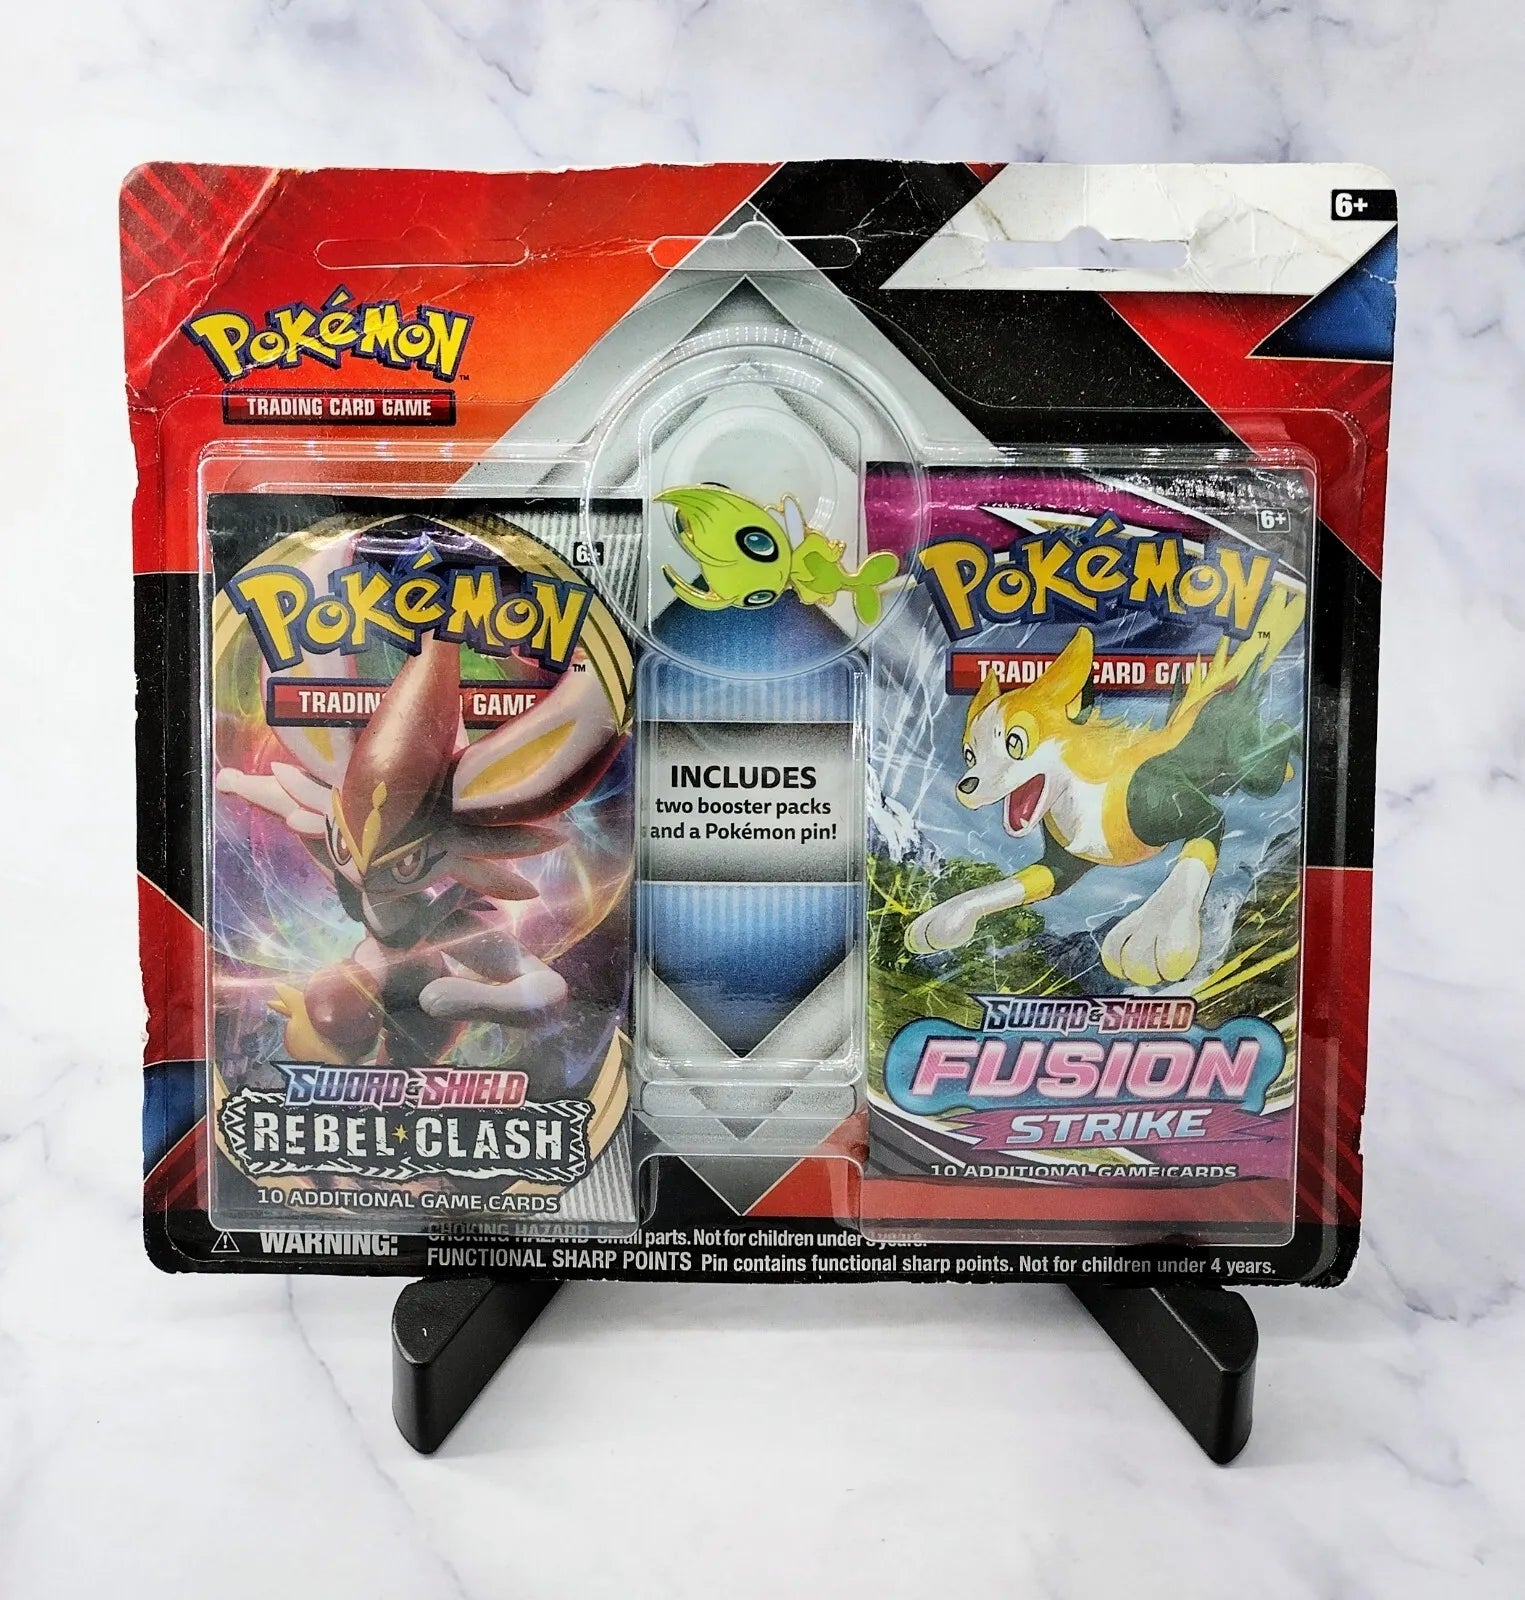 Pokémon Rebel Clash/Fusion Strike Double Blister Pack with Celebi Pin